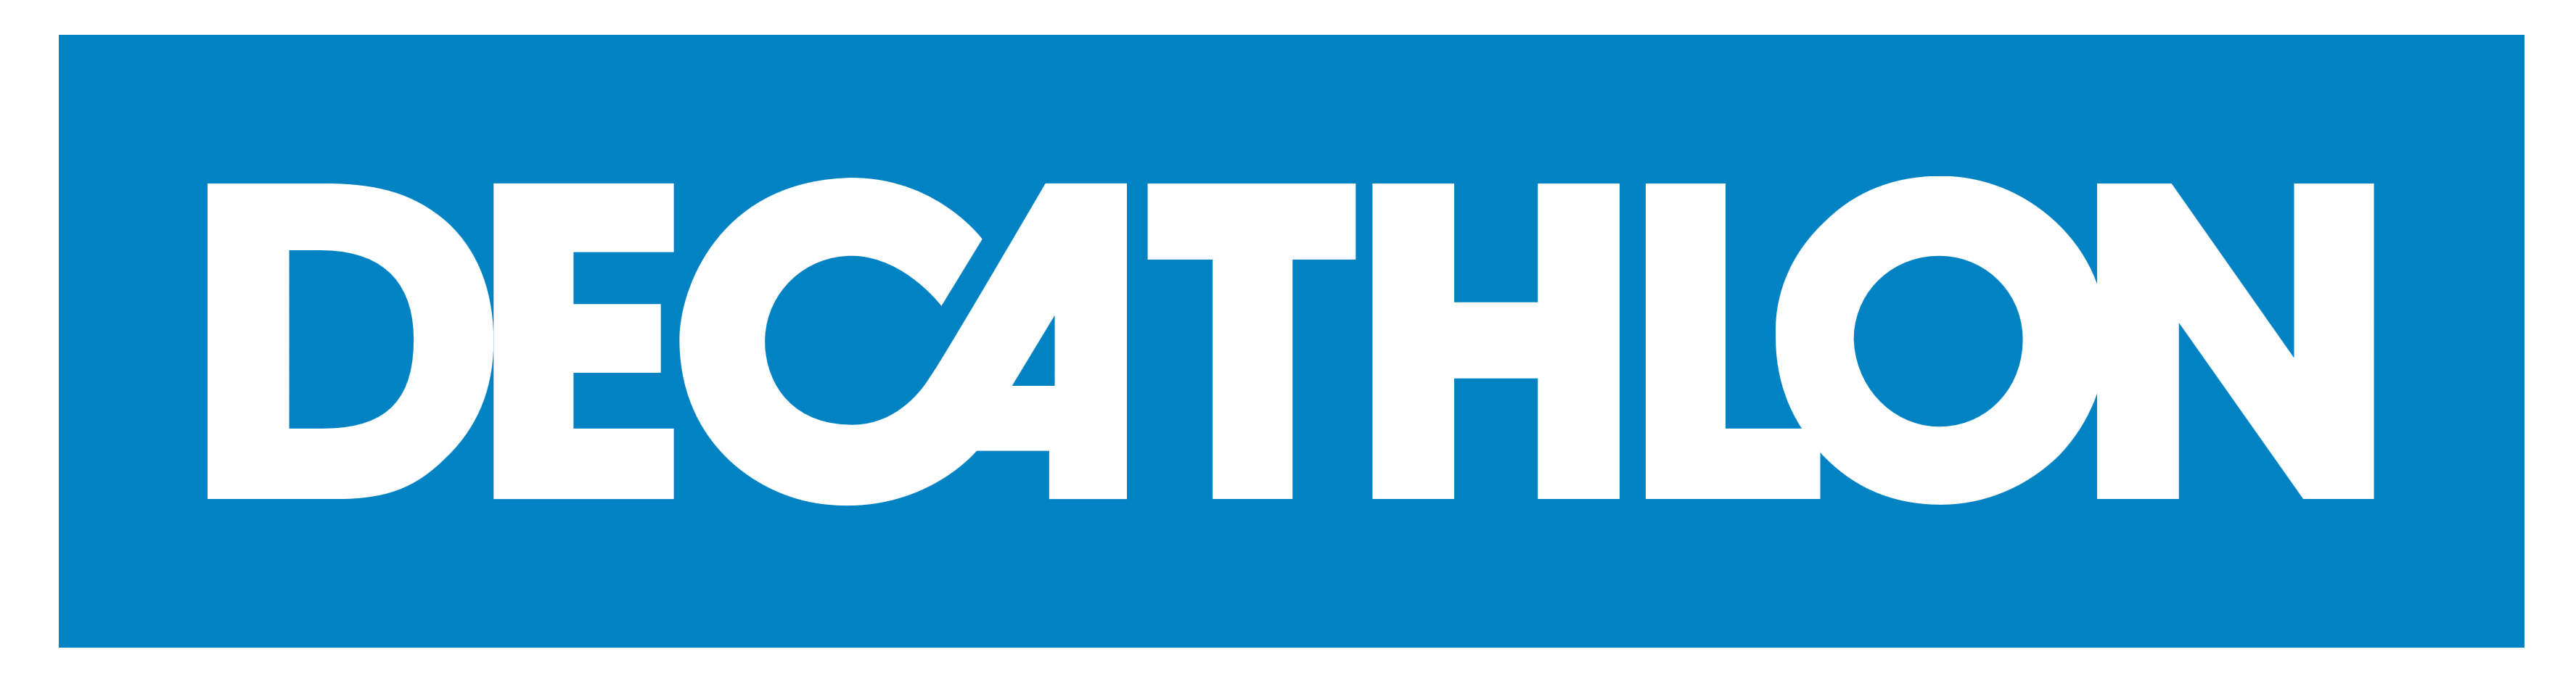 Decathlon Logo - Decathlon – Logos, brands and logotypes